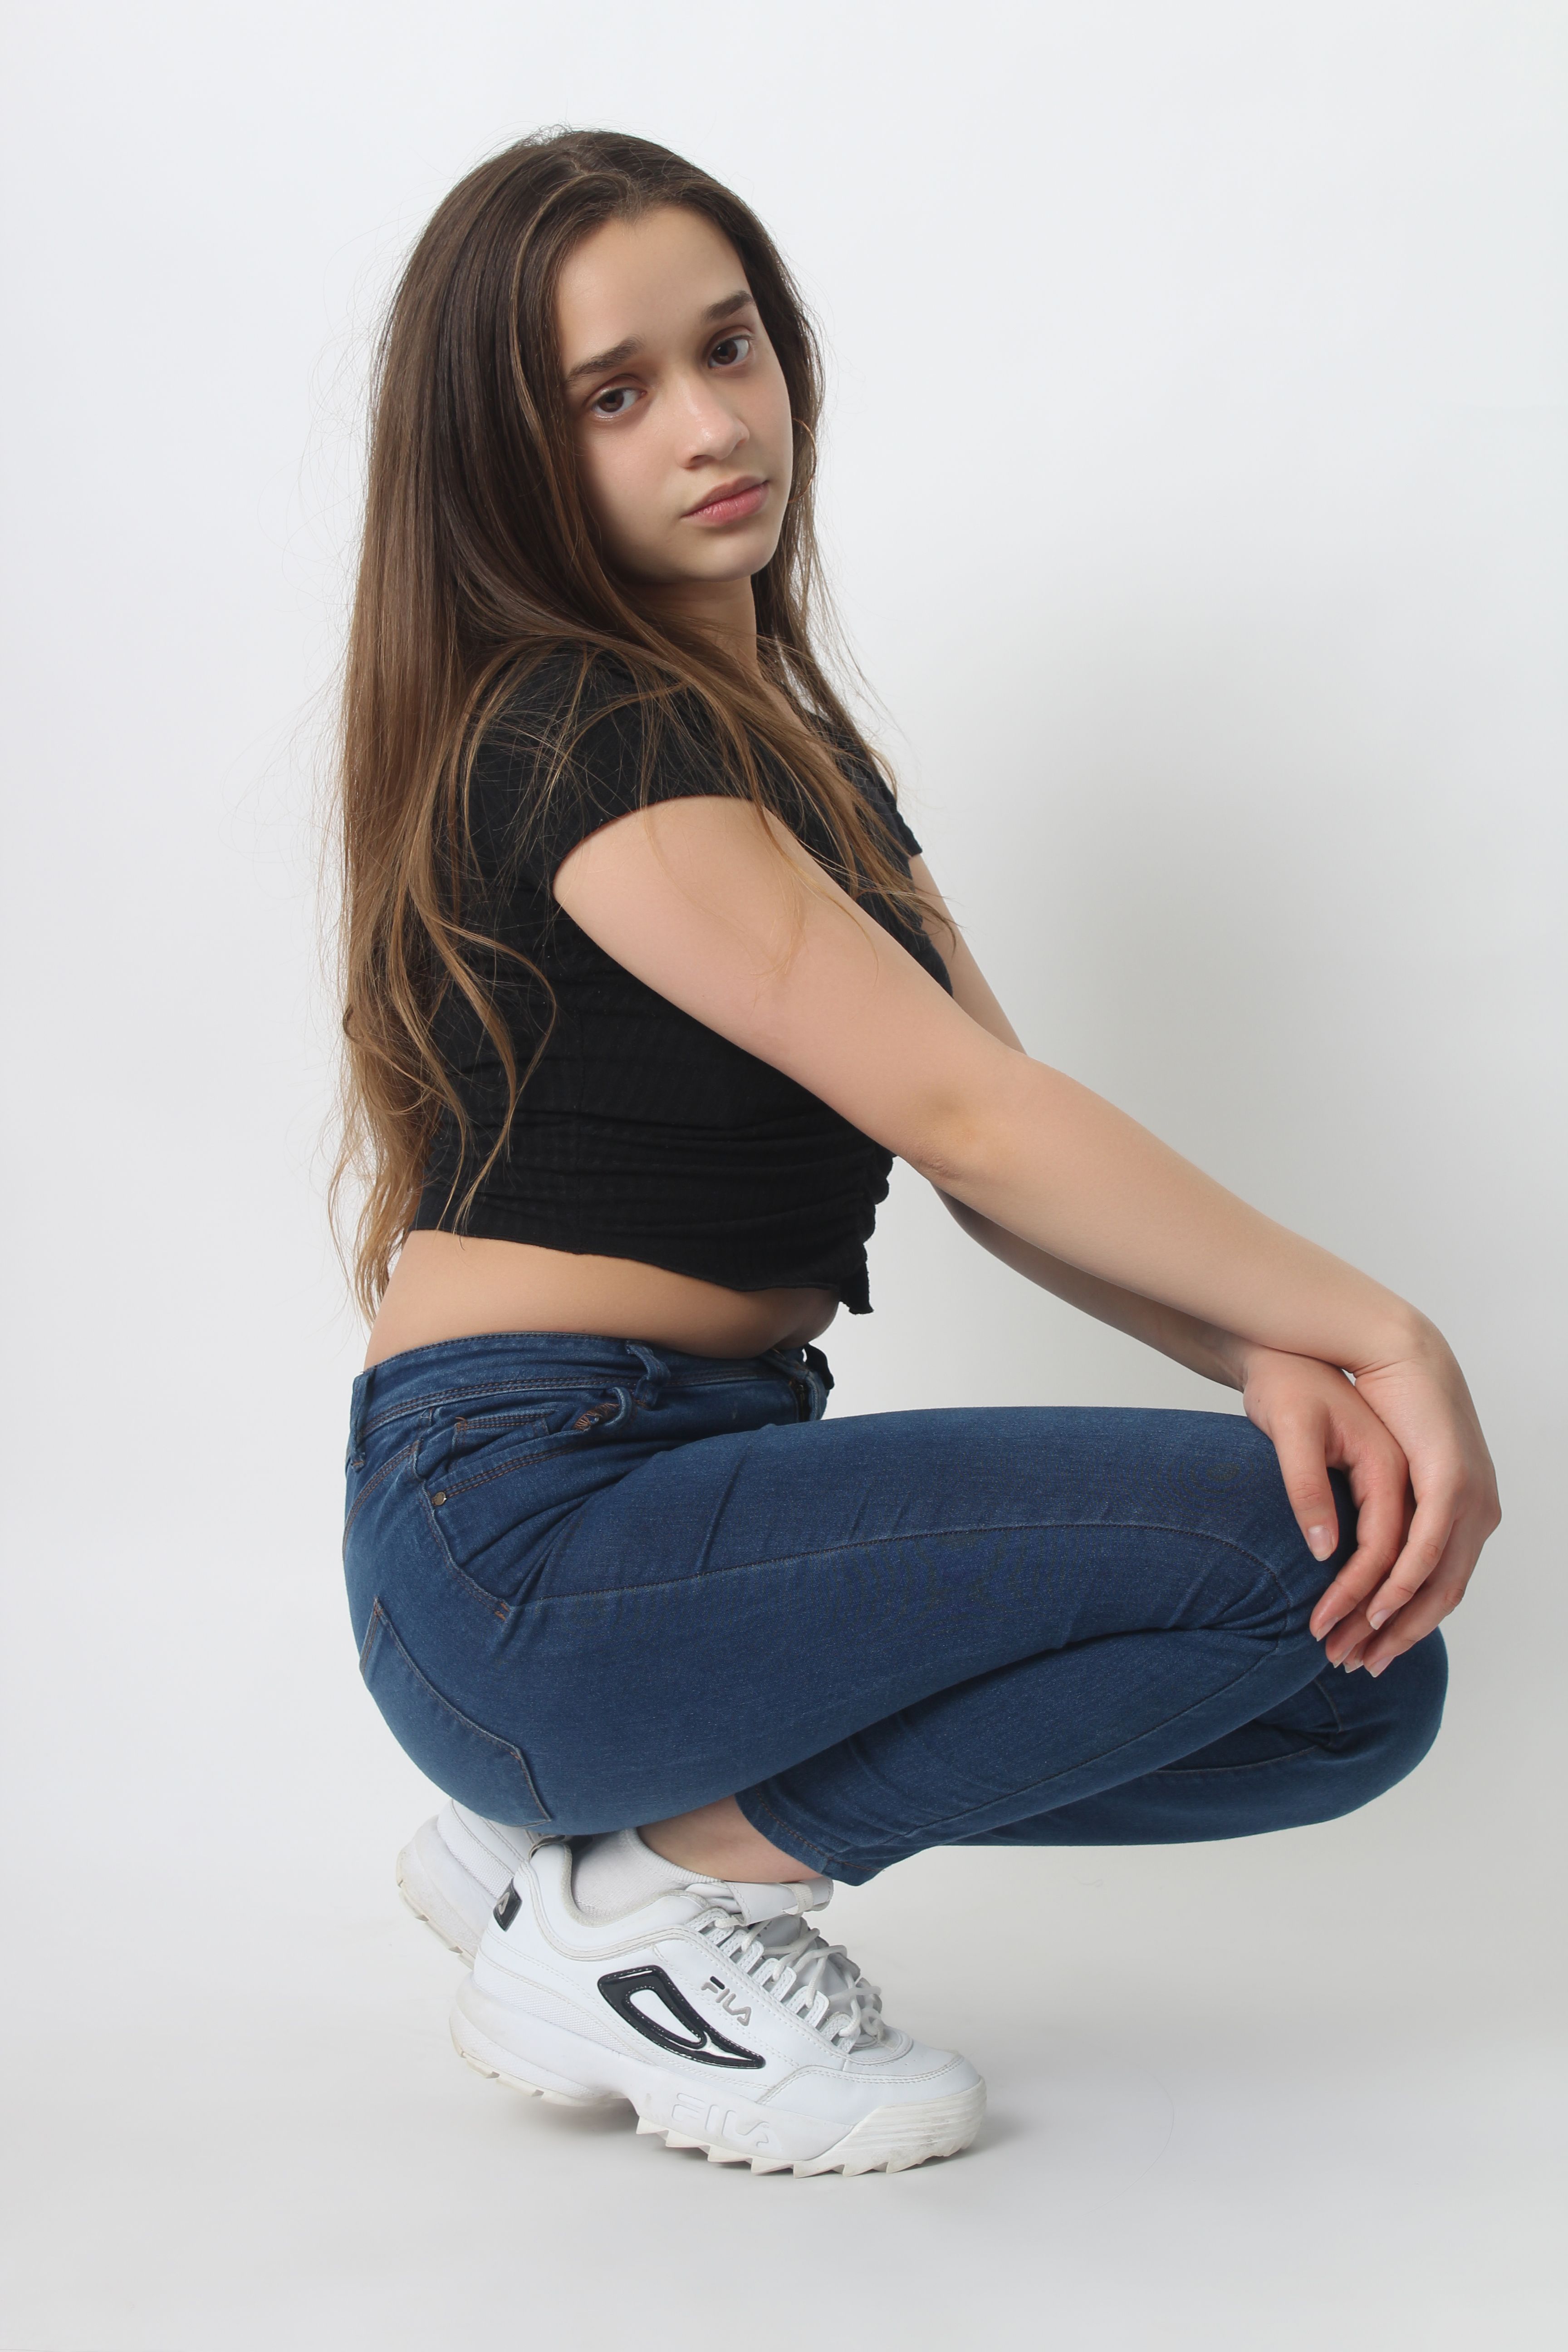 Brianna Santos Profile | YUMM - Your Model Management